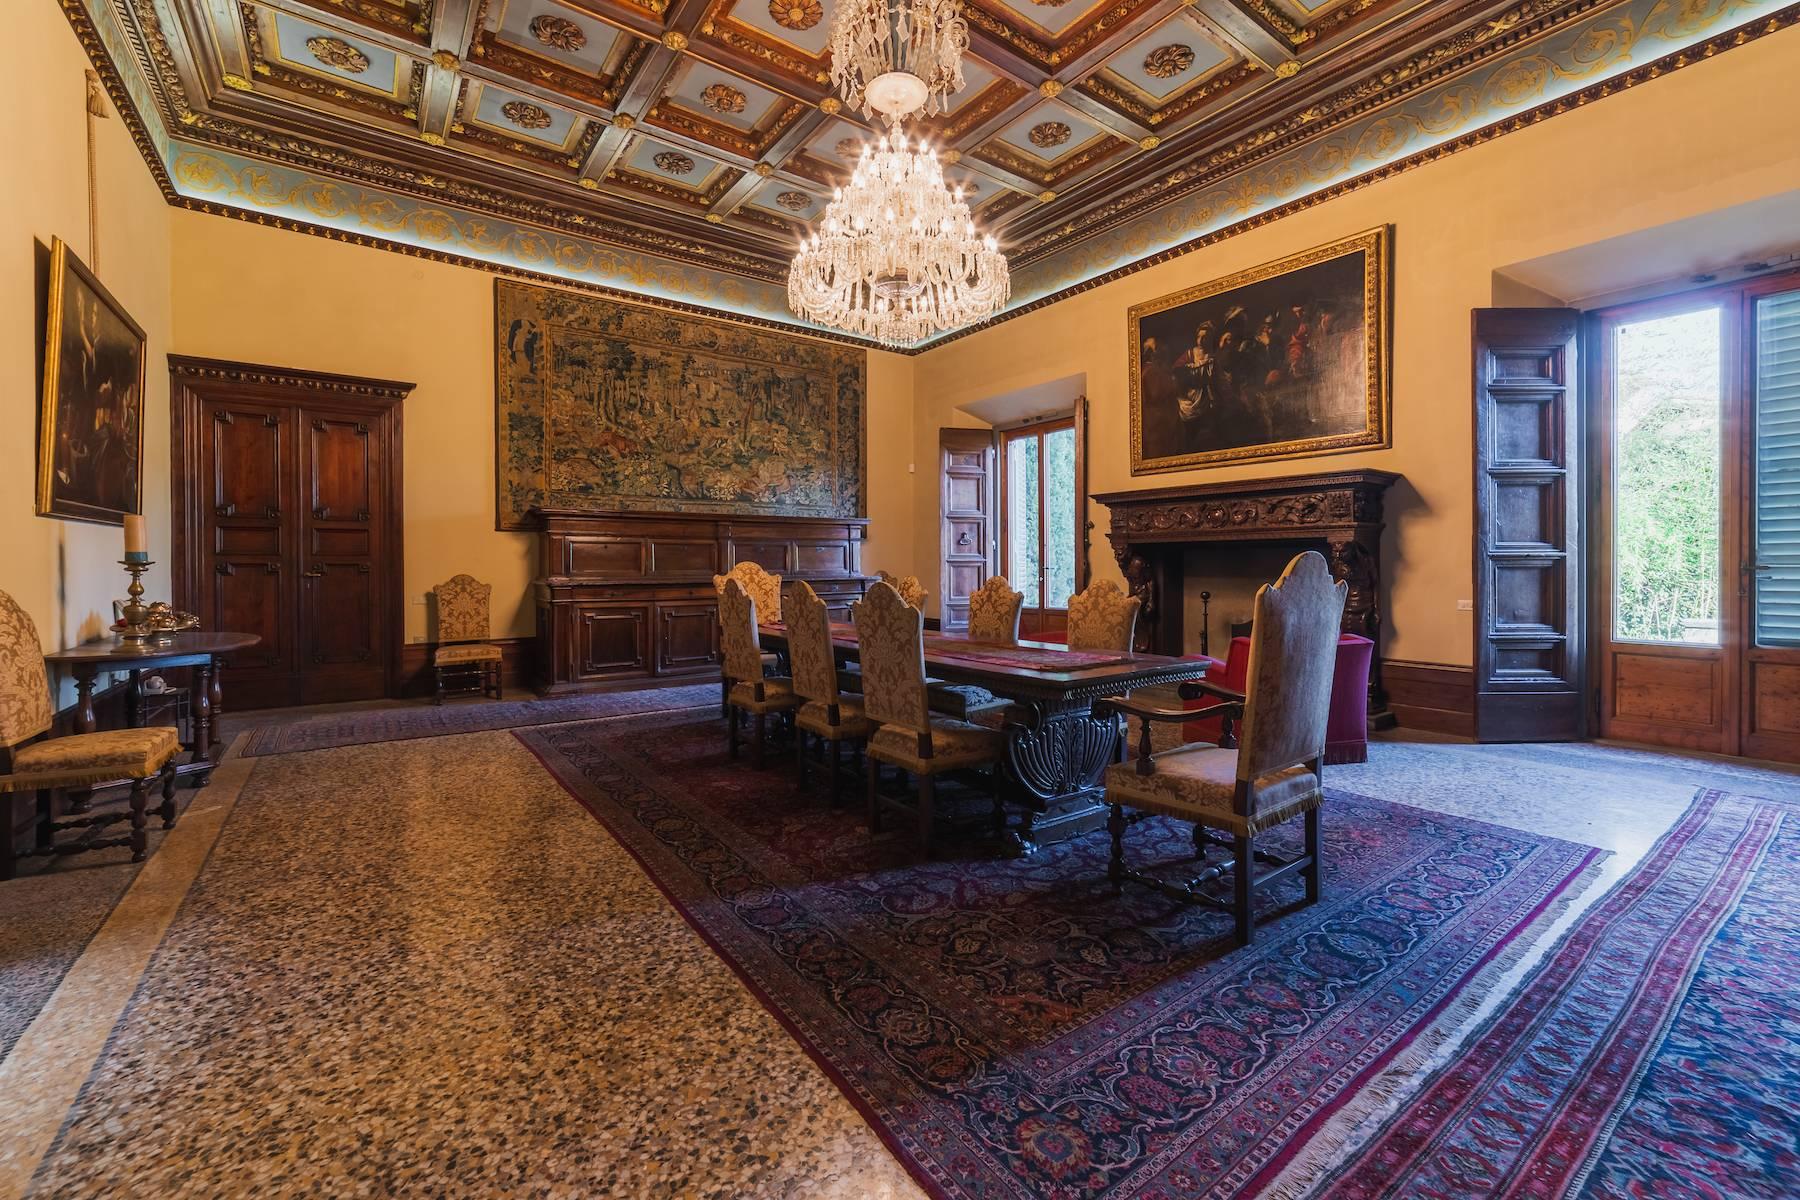 Elegant XIVth Century villa in 1 hectare park in Florence - 15